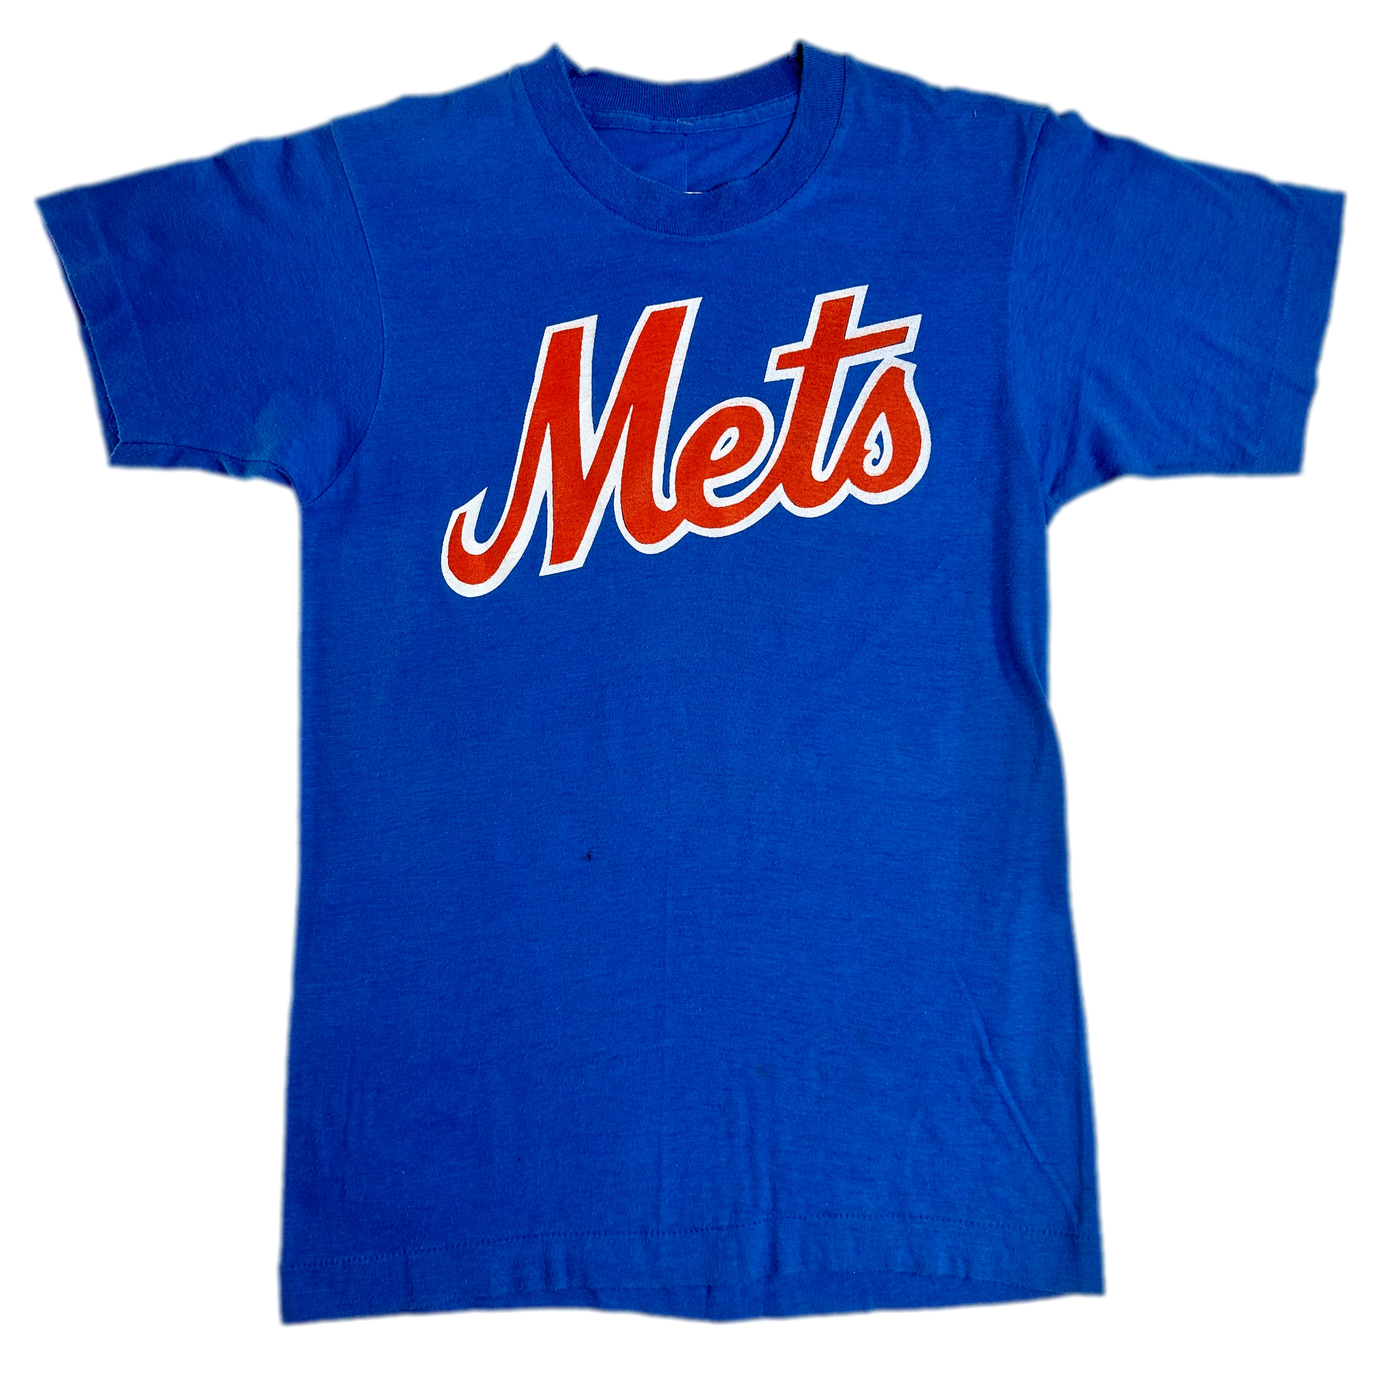 90's New York Mets Blue Sports T-shirt sz XS